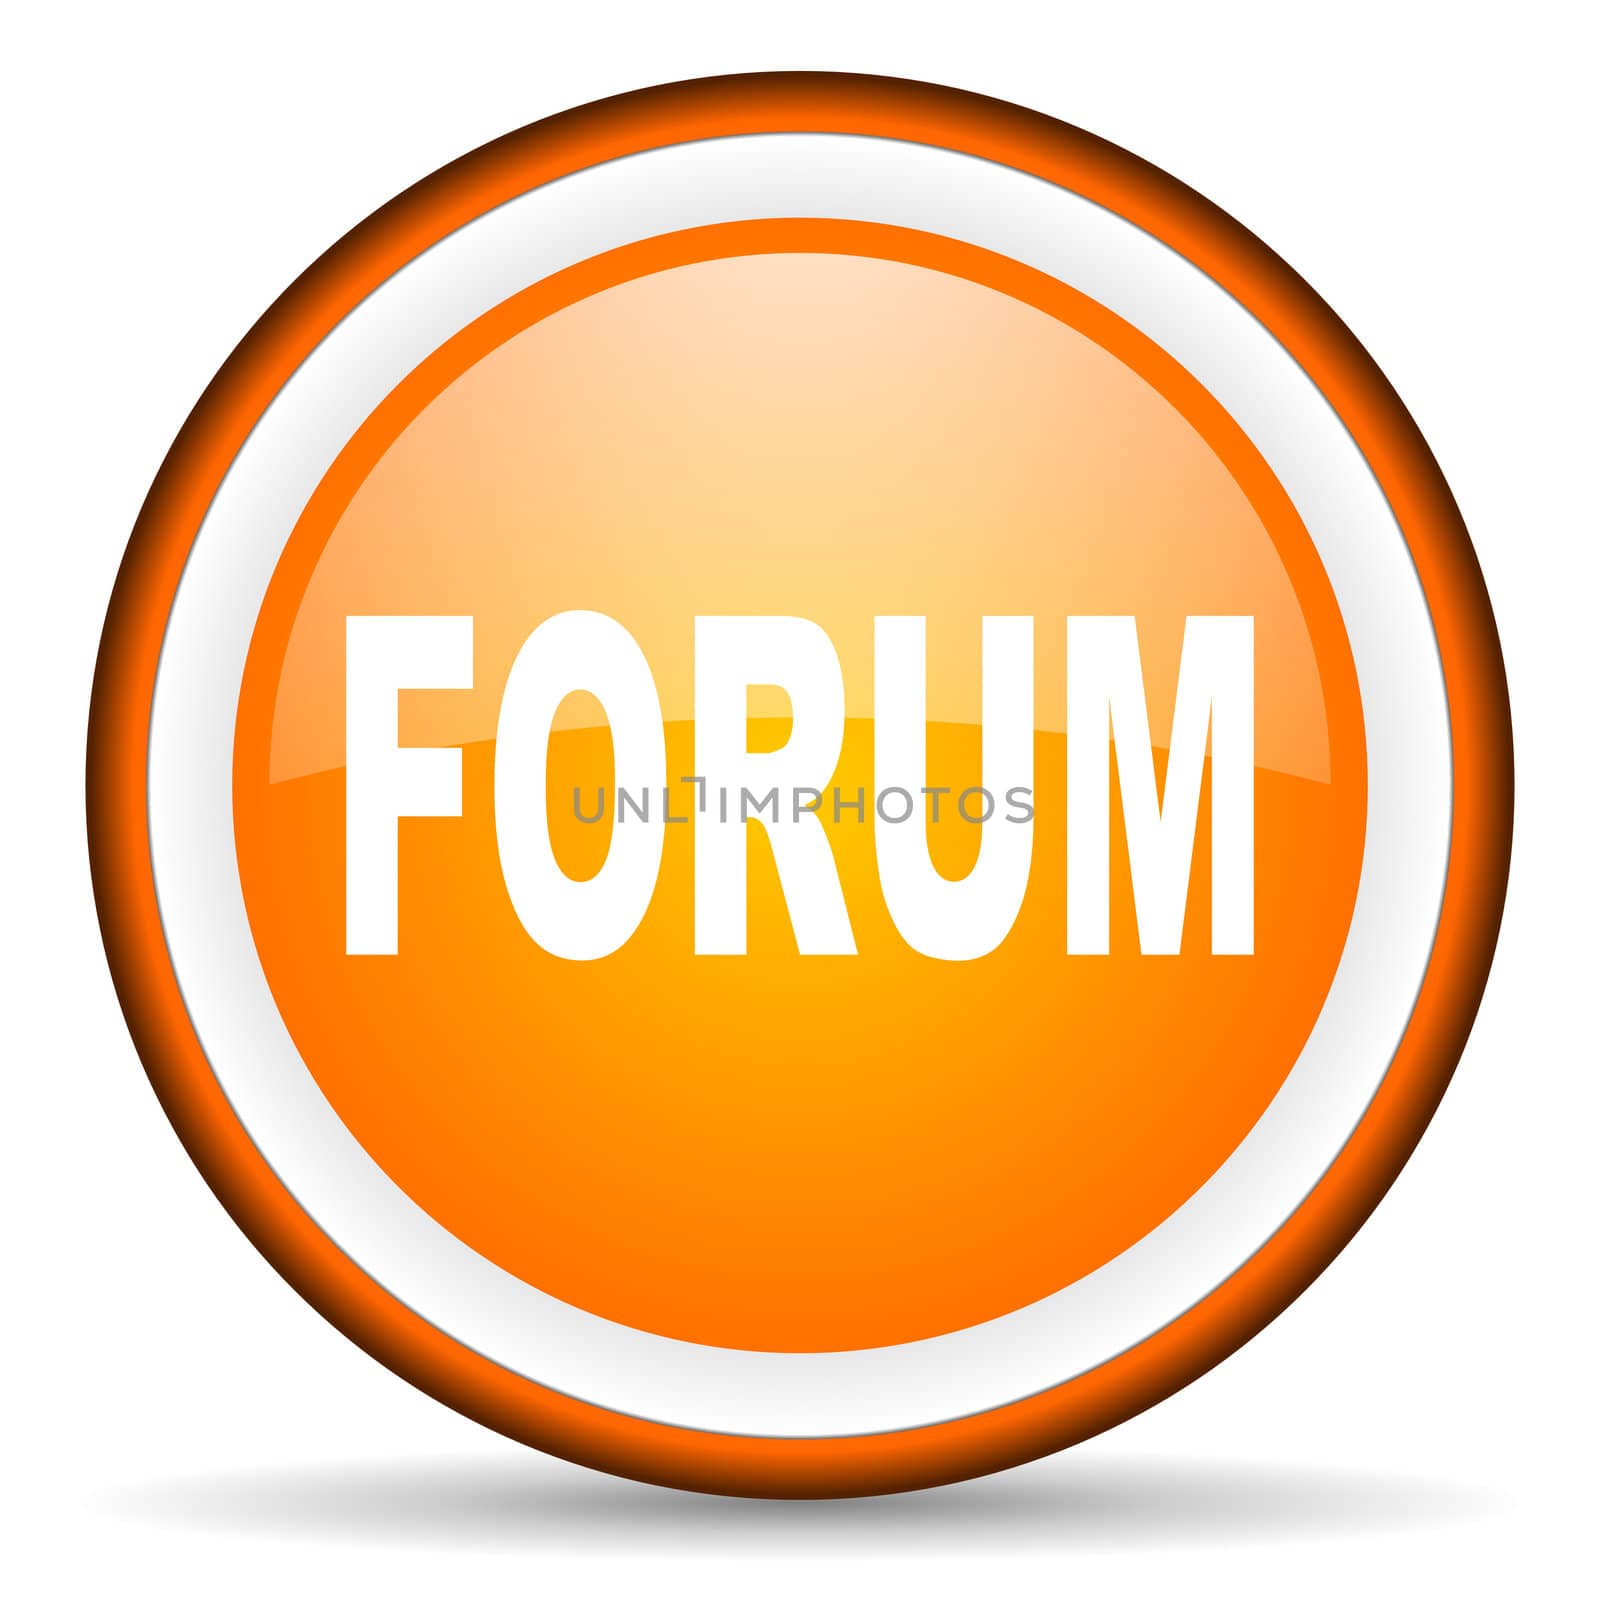 forum orange glossy circle icon on white background